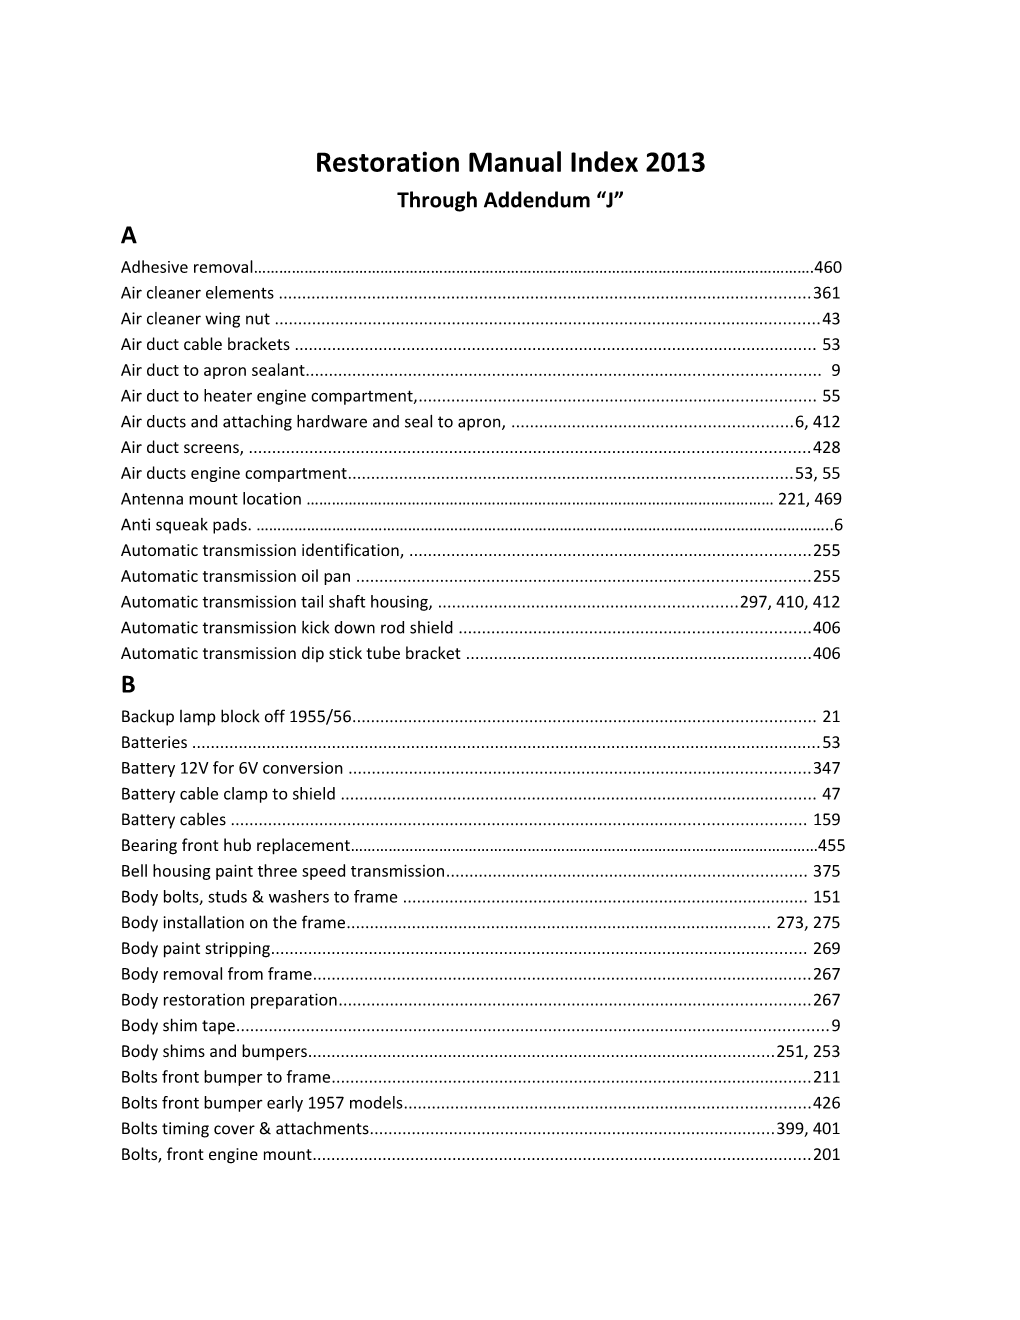 Restoration Manual Index 2011